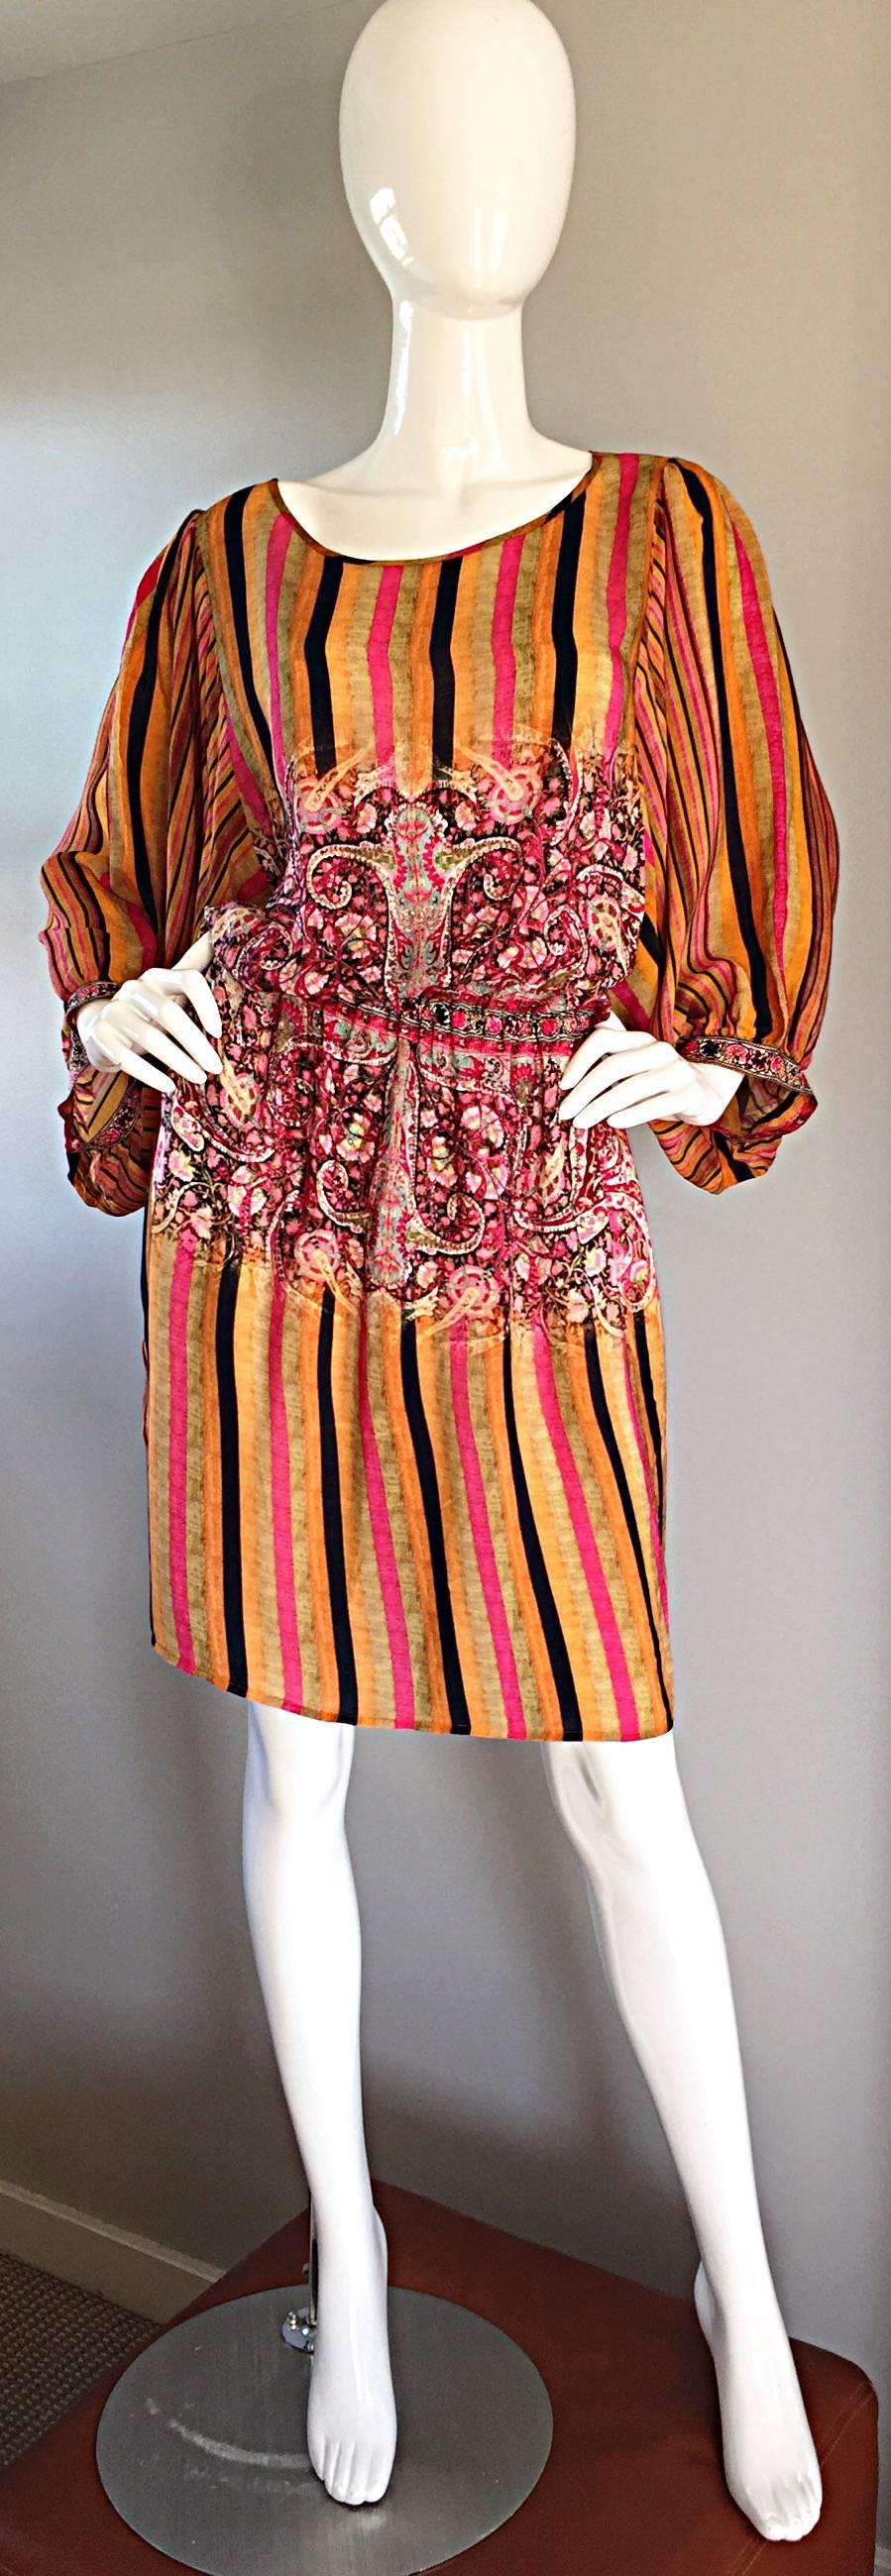 colorful tunic dress